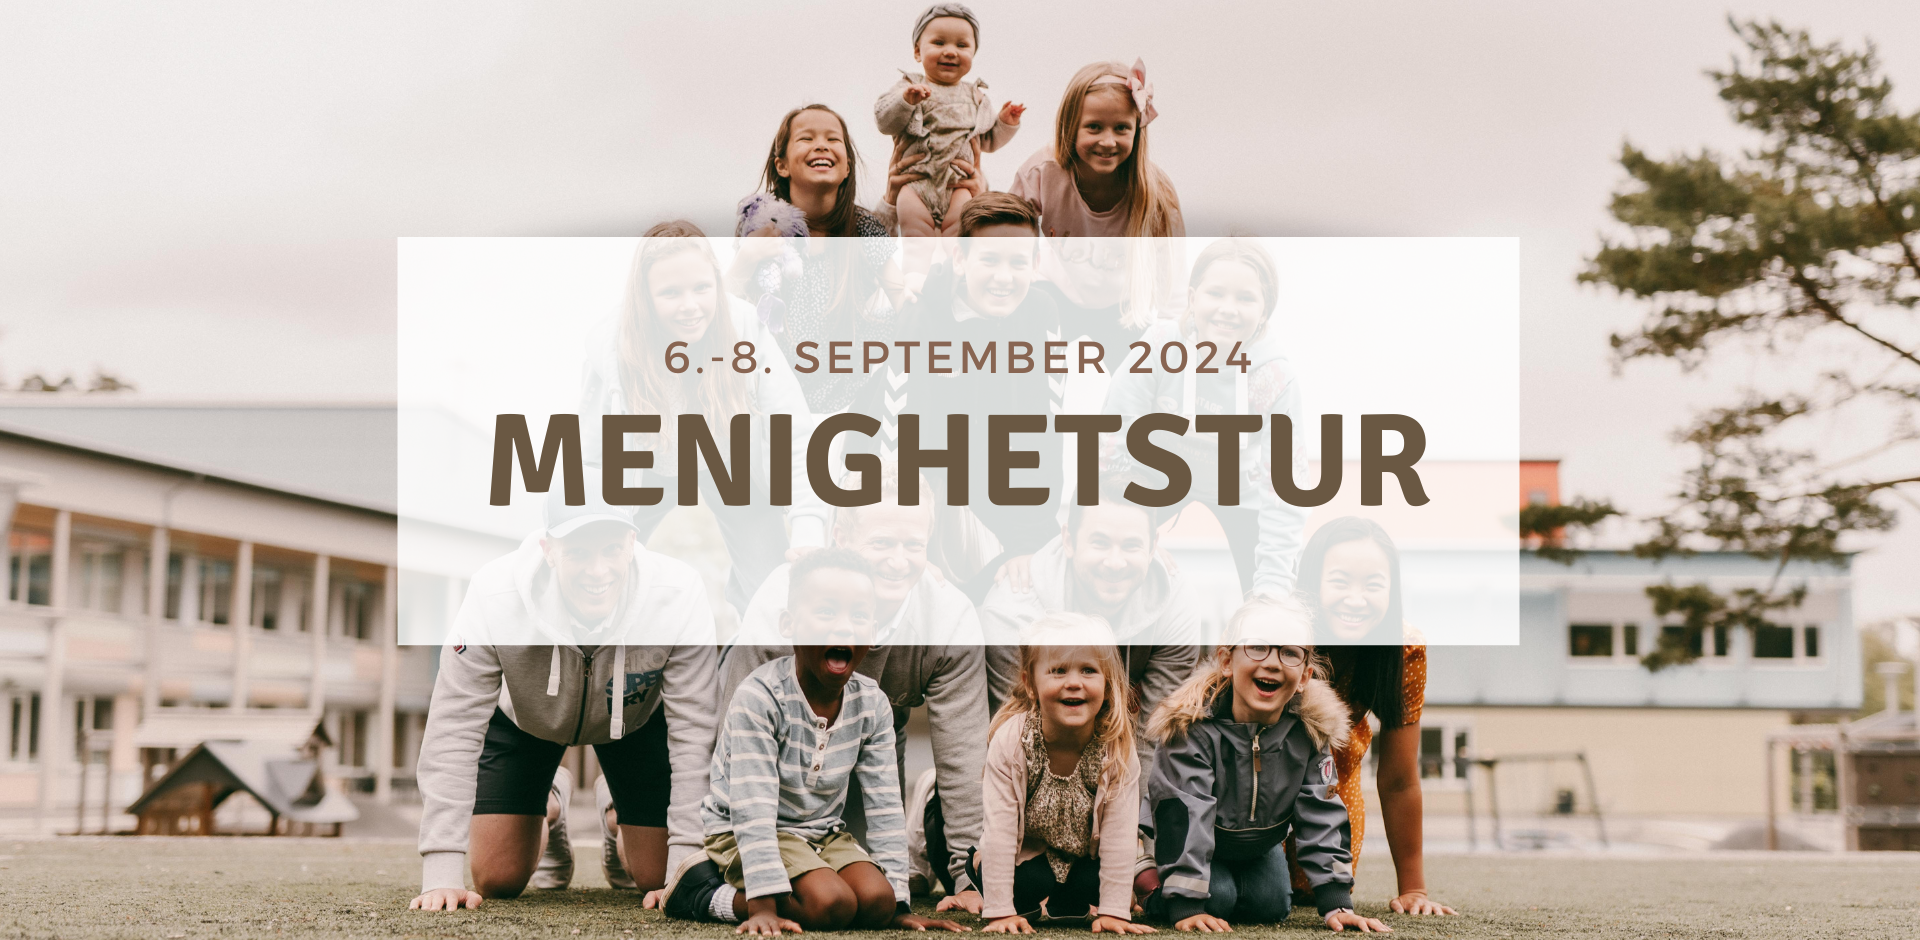 Save the date - menighetstur 6-8. sep 2024